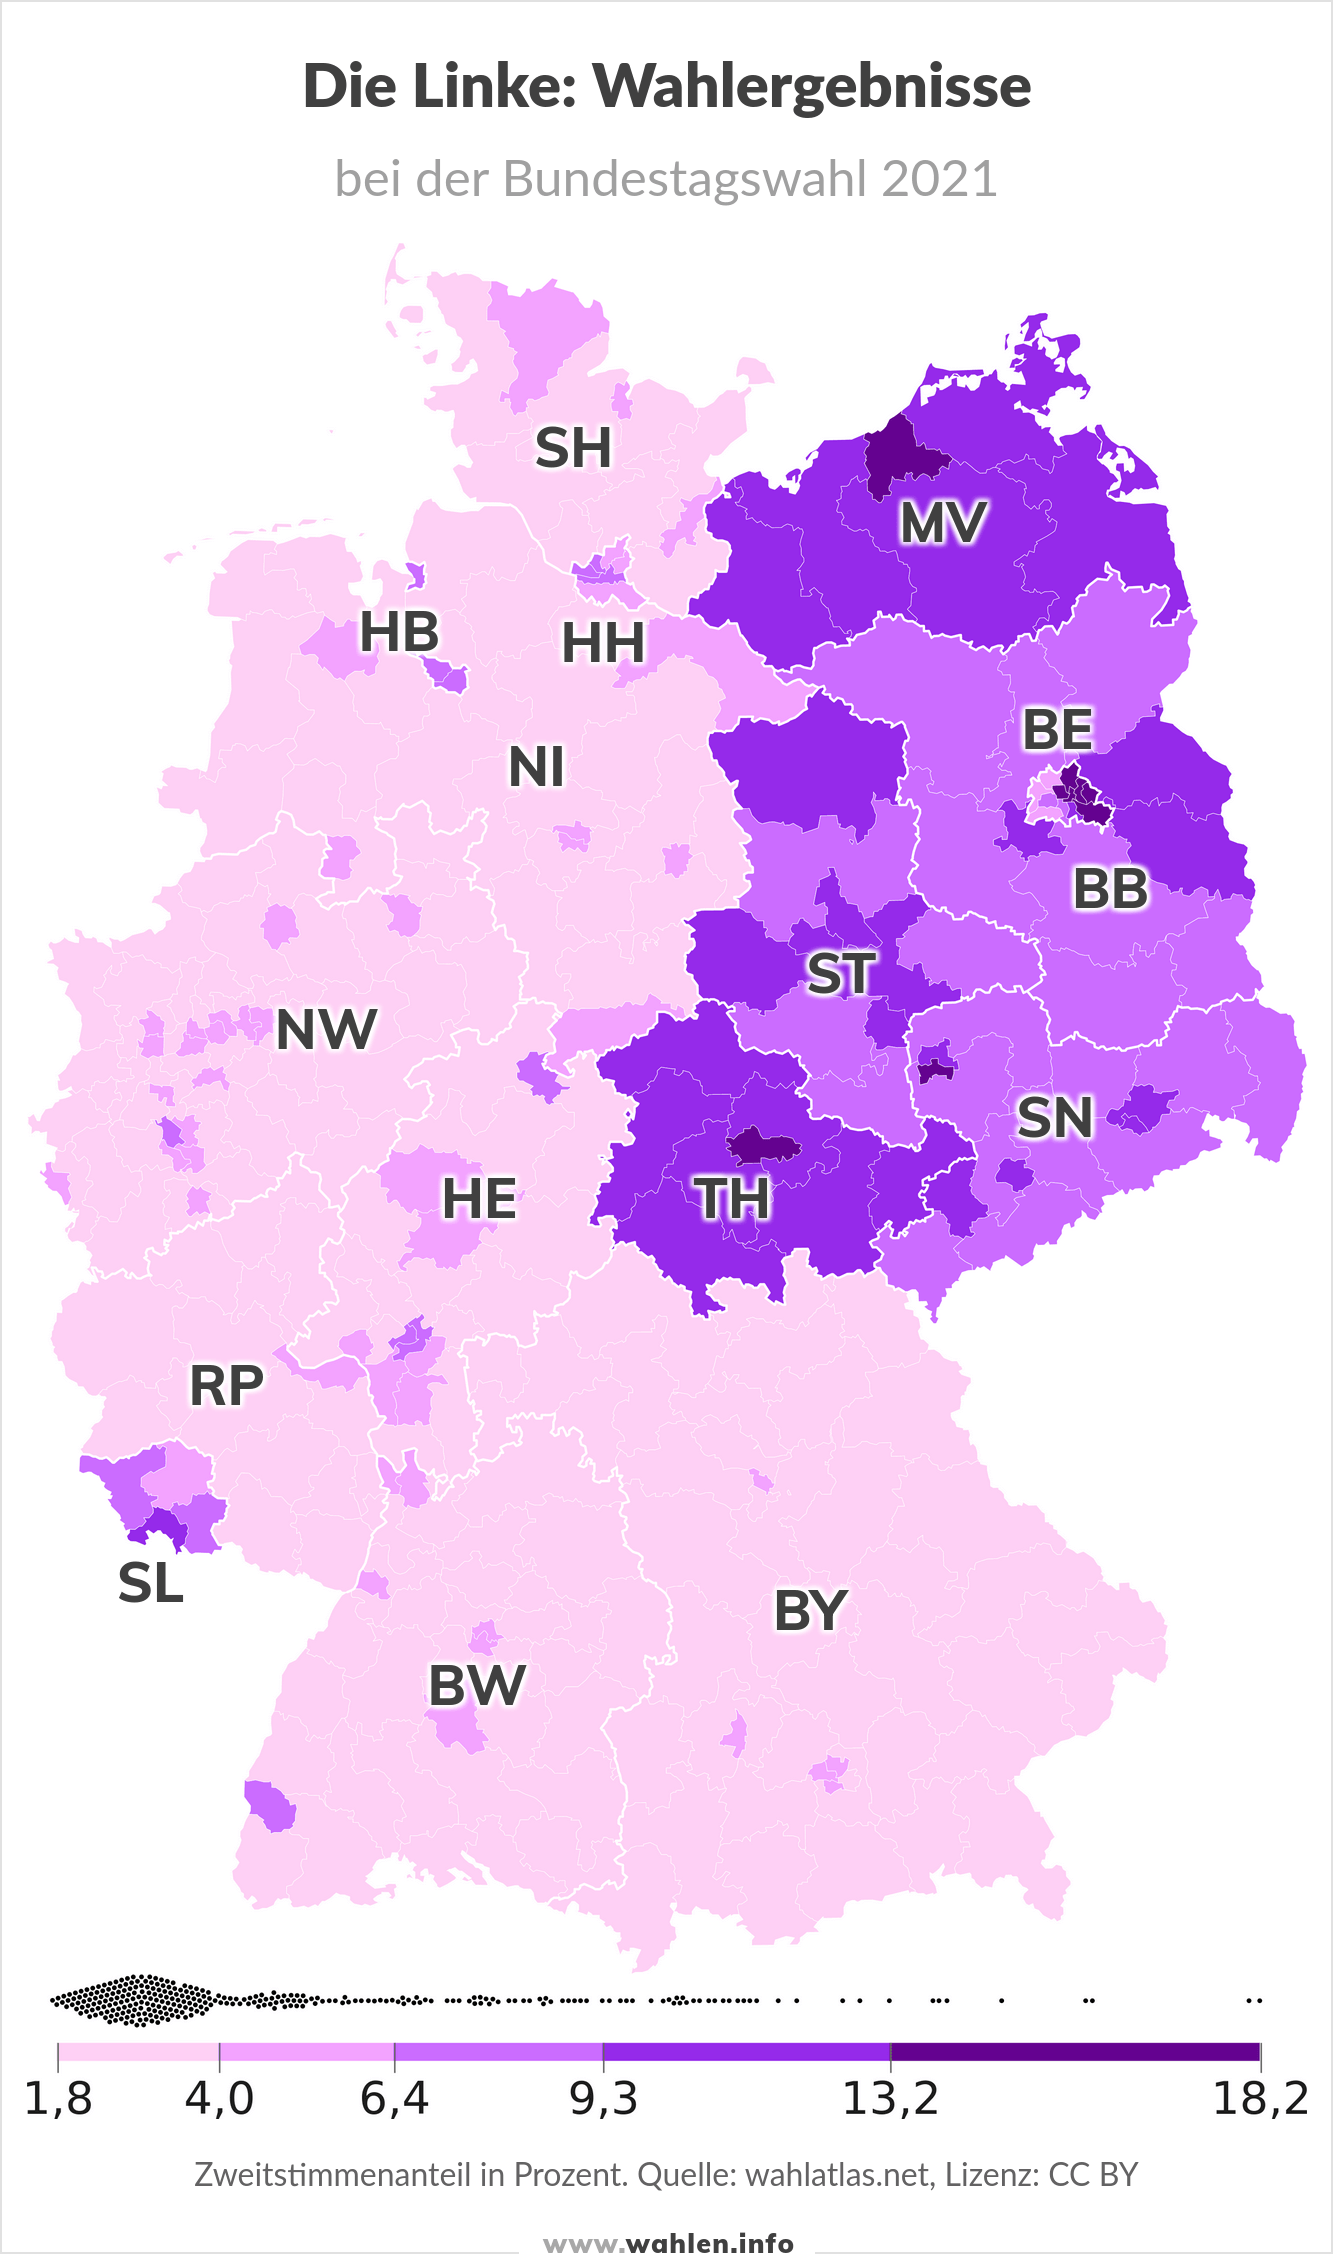 Bundestagswahl 2025 - Die Linke, Wahlergebnis bei der Bundestagswahl 2021 (Karte)